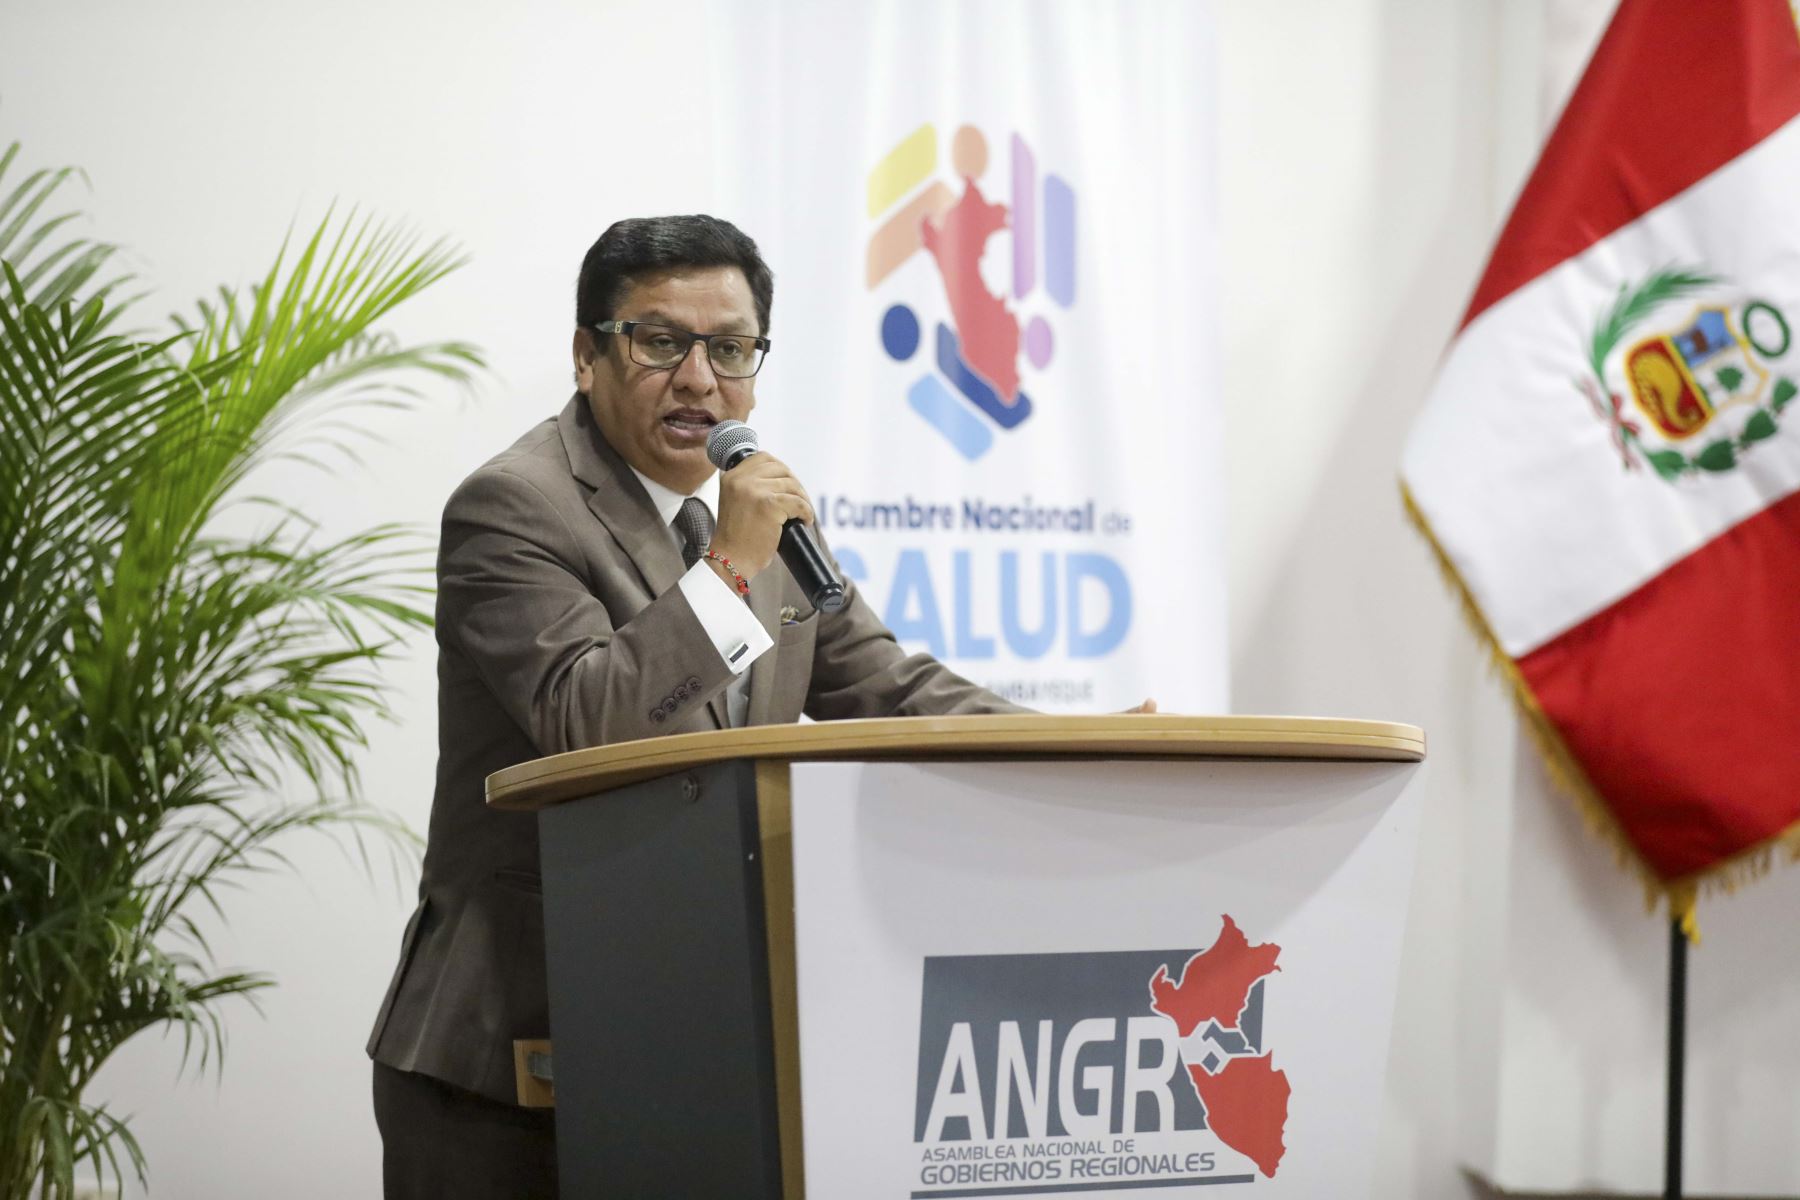 El ministro César Vásquez participó en la I Cumbre Nacional de Salud, celebrada en la ciudad de Chiclayo. Foto: ANDINA/Minsa